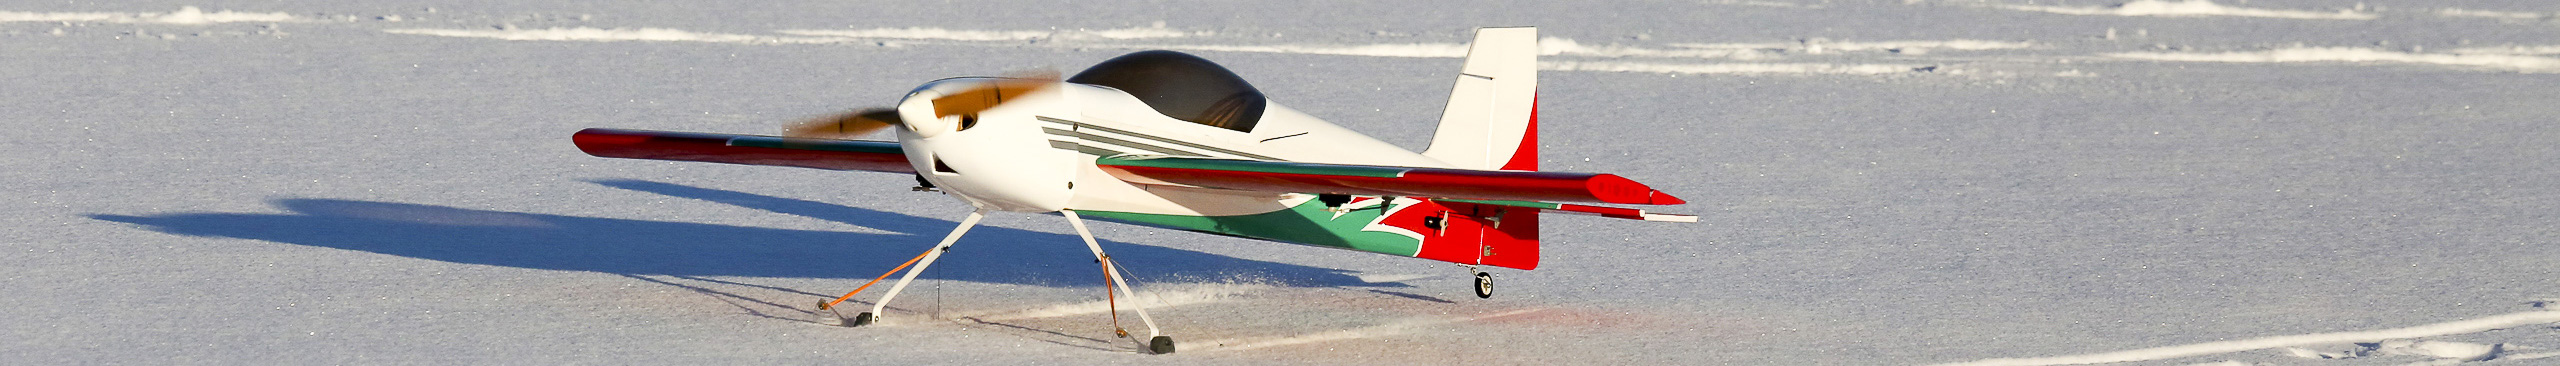 Modellflugzeug im Winter. Kopfbild